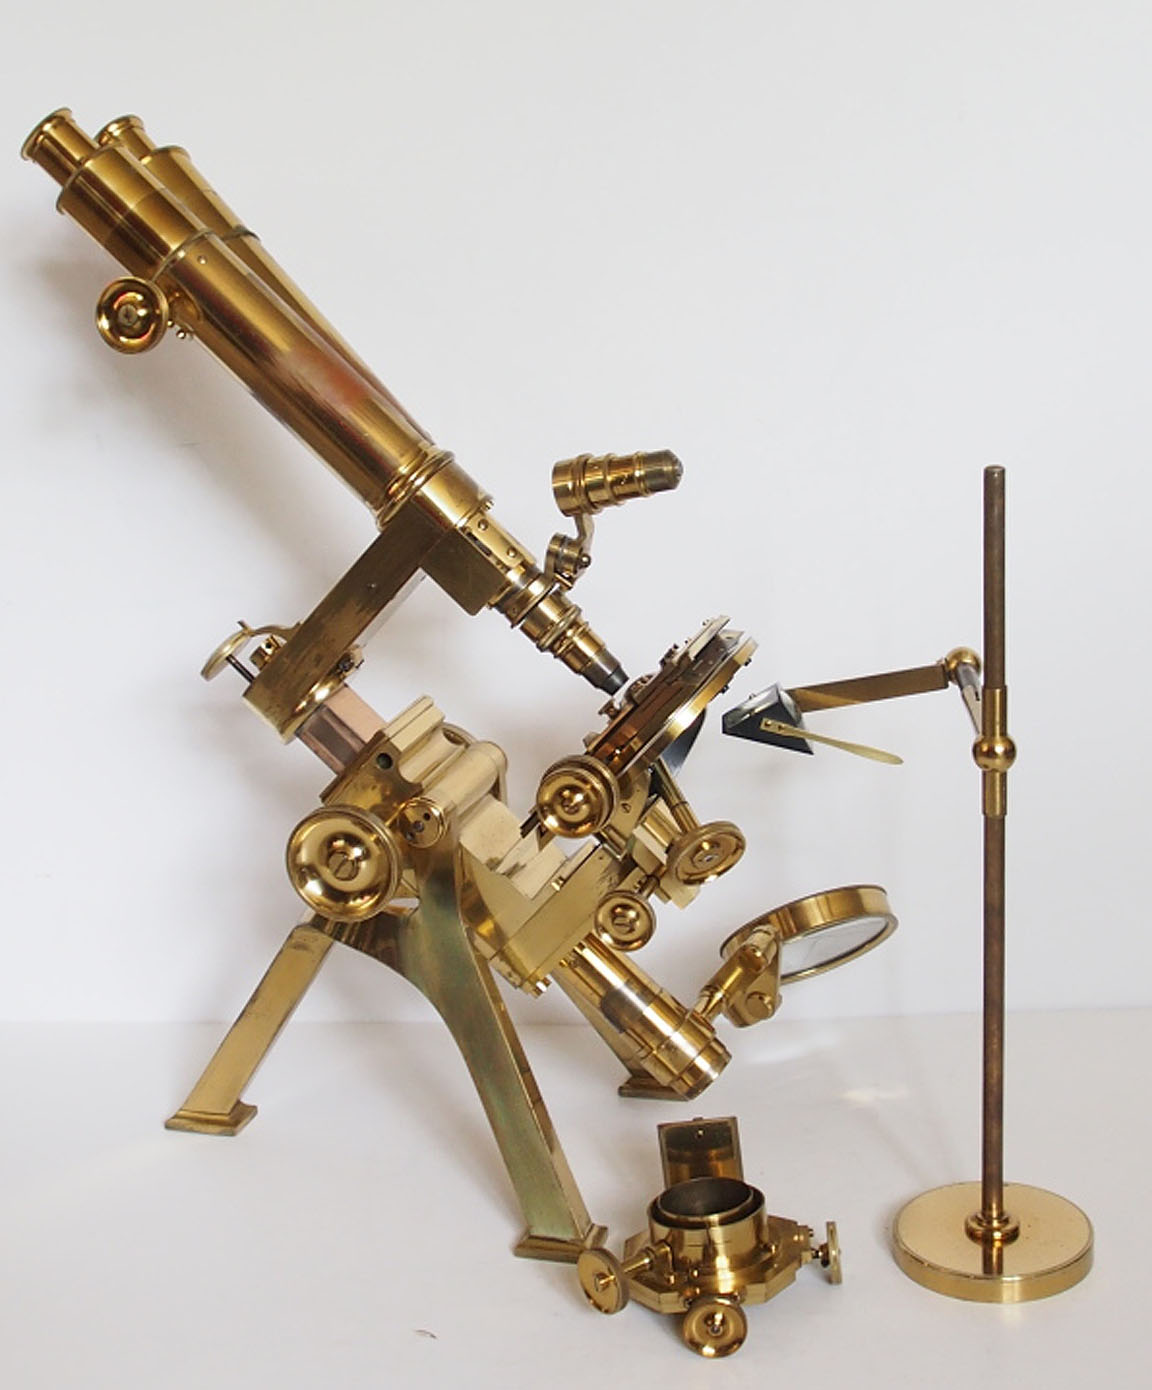 Powell & Lealand No. 1 Microscope